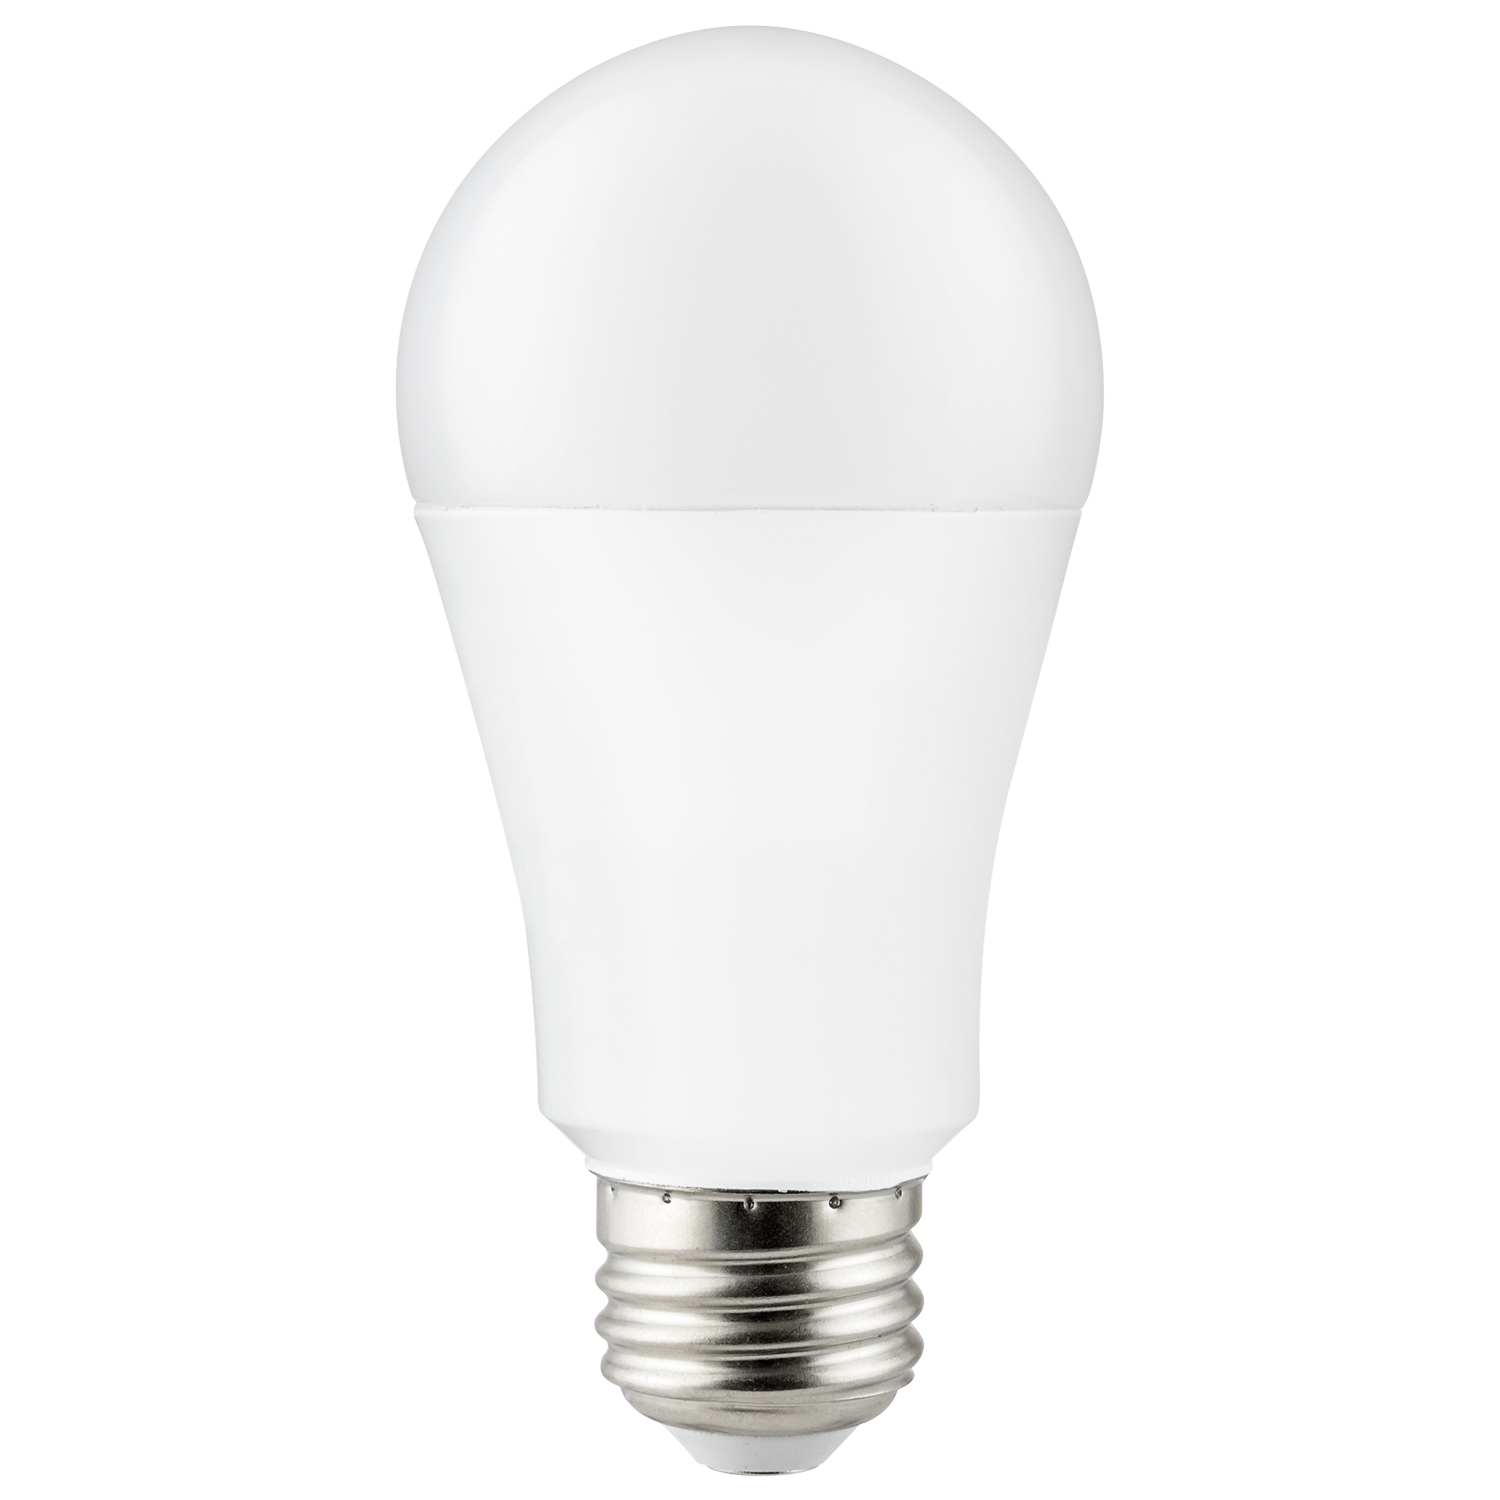 LED A19 Super Bright Light Bulb, Dimmable, 14 Watt 1500 Lumen - Click Image to Close